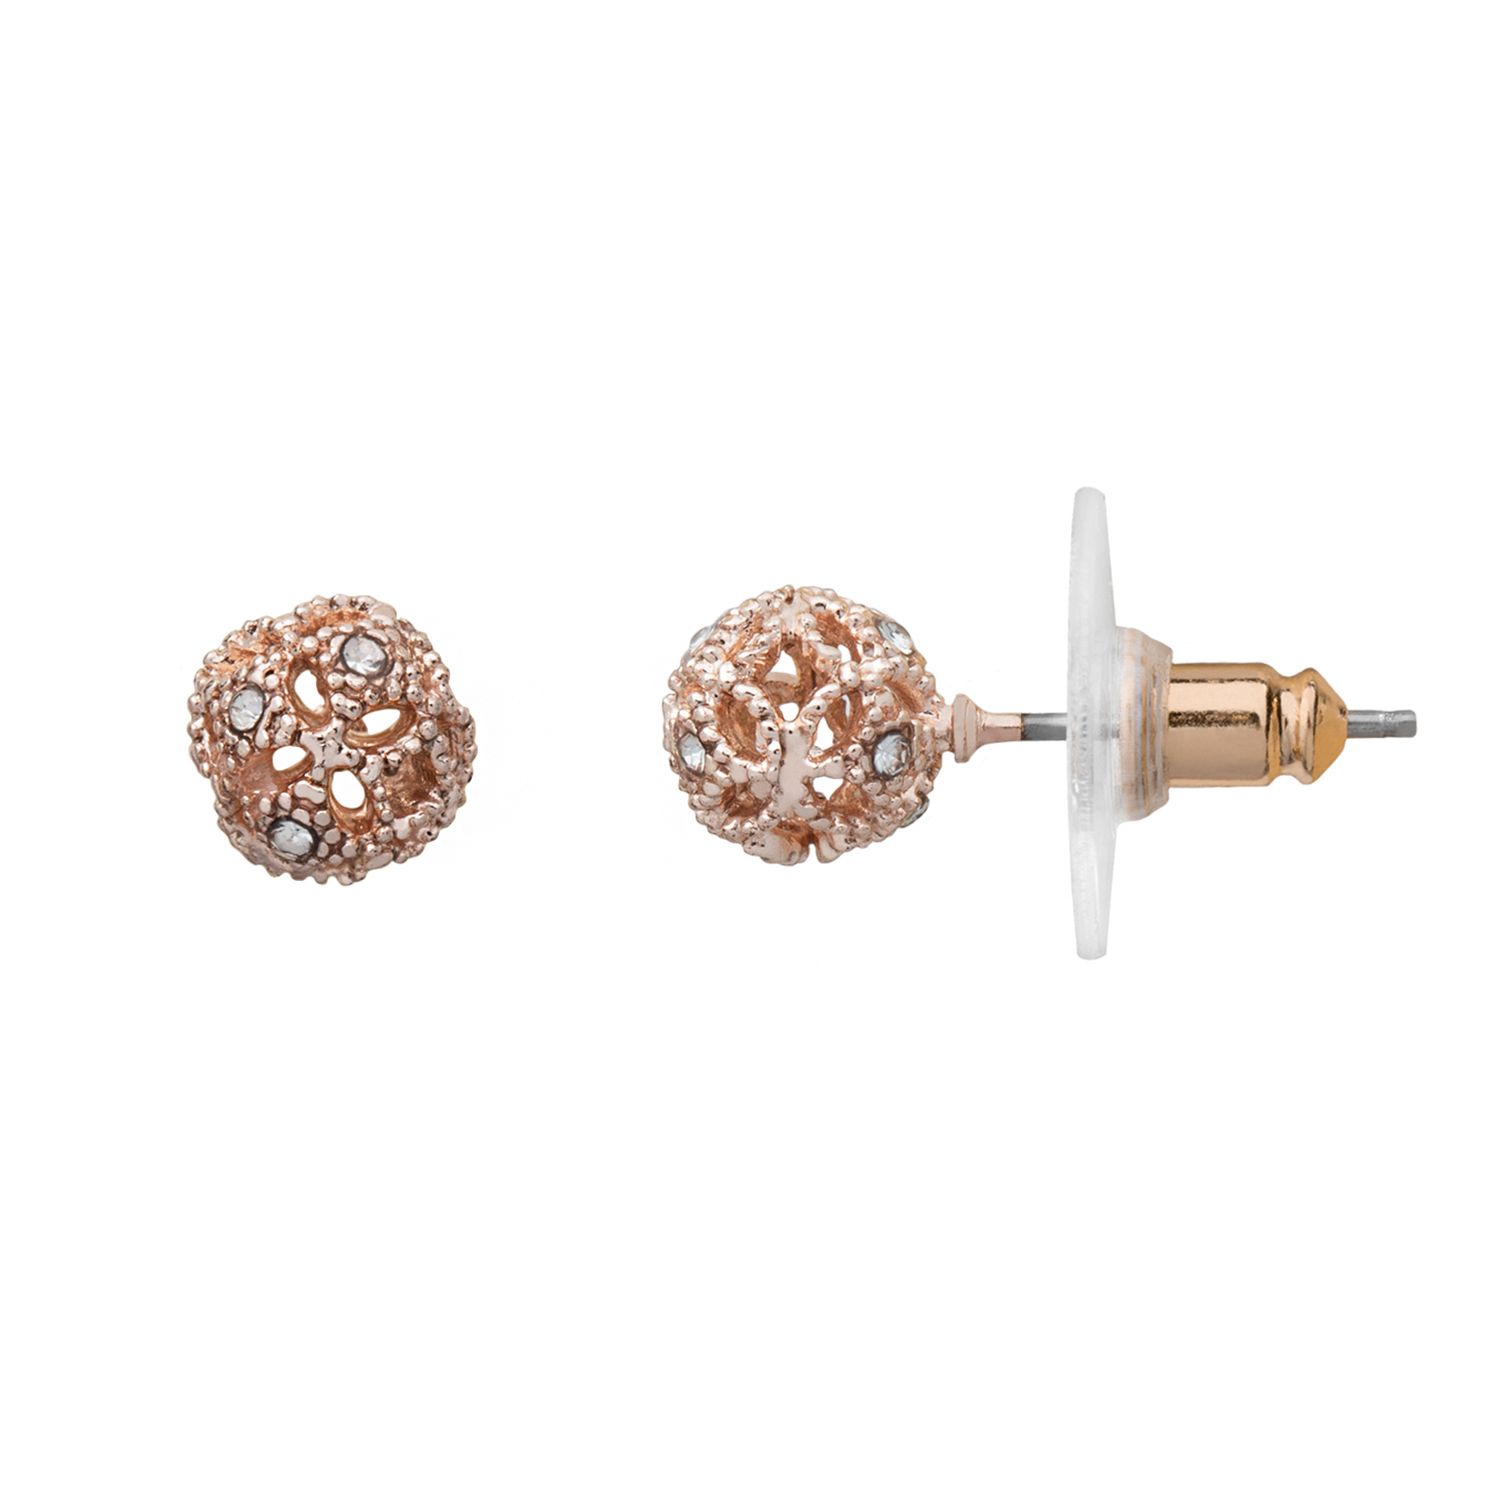 Image for LC Lauren Conrad Openwork Ball Stud Earrings at Kohl's.